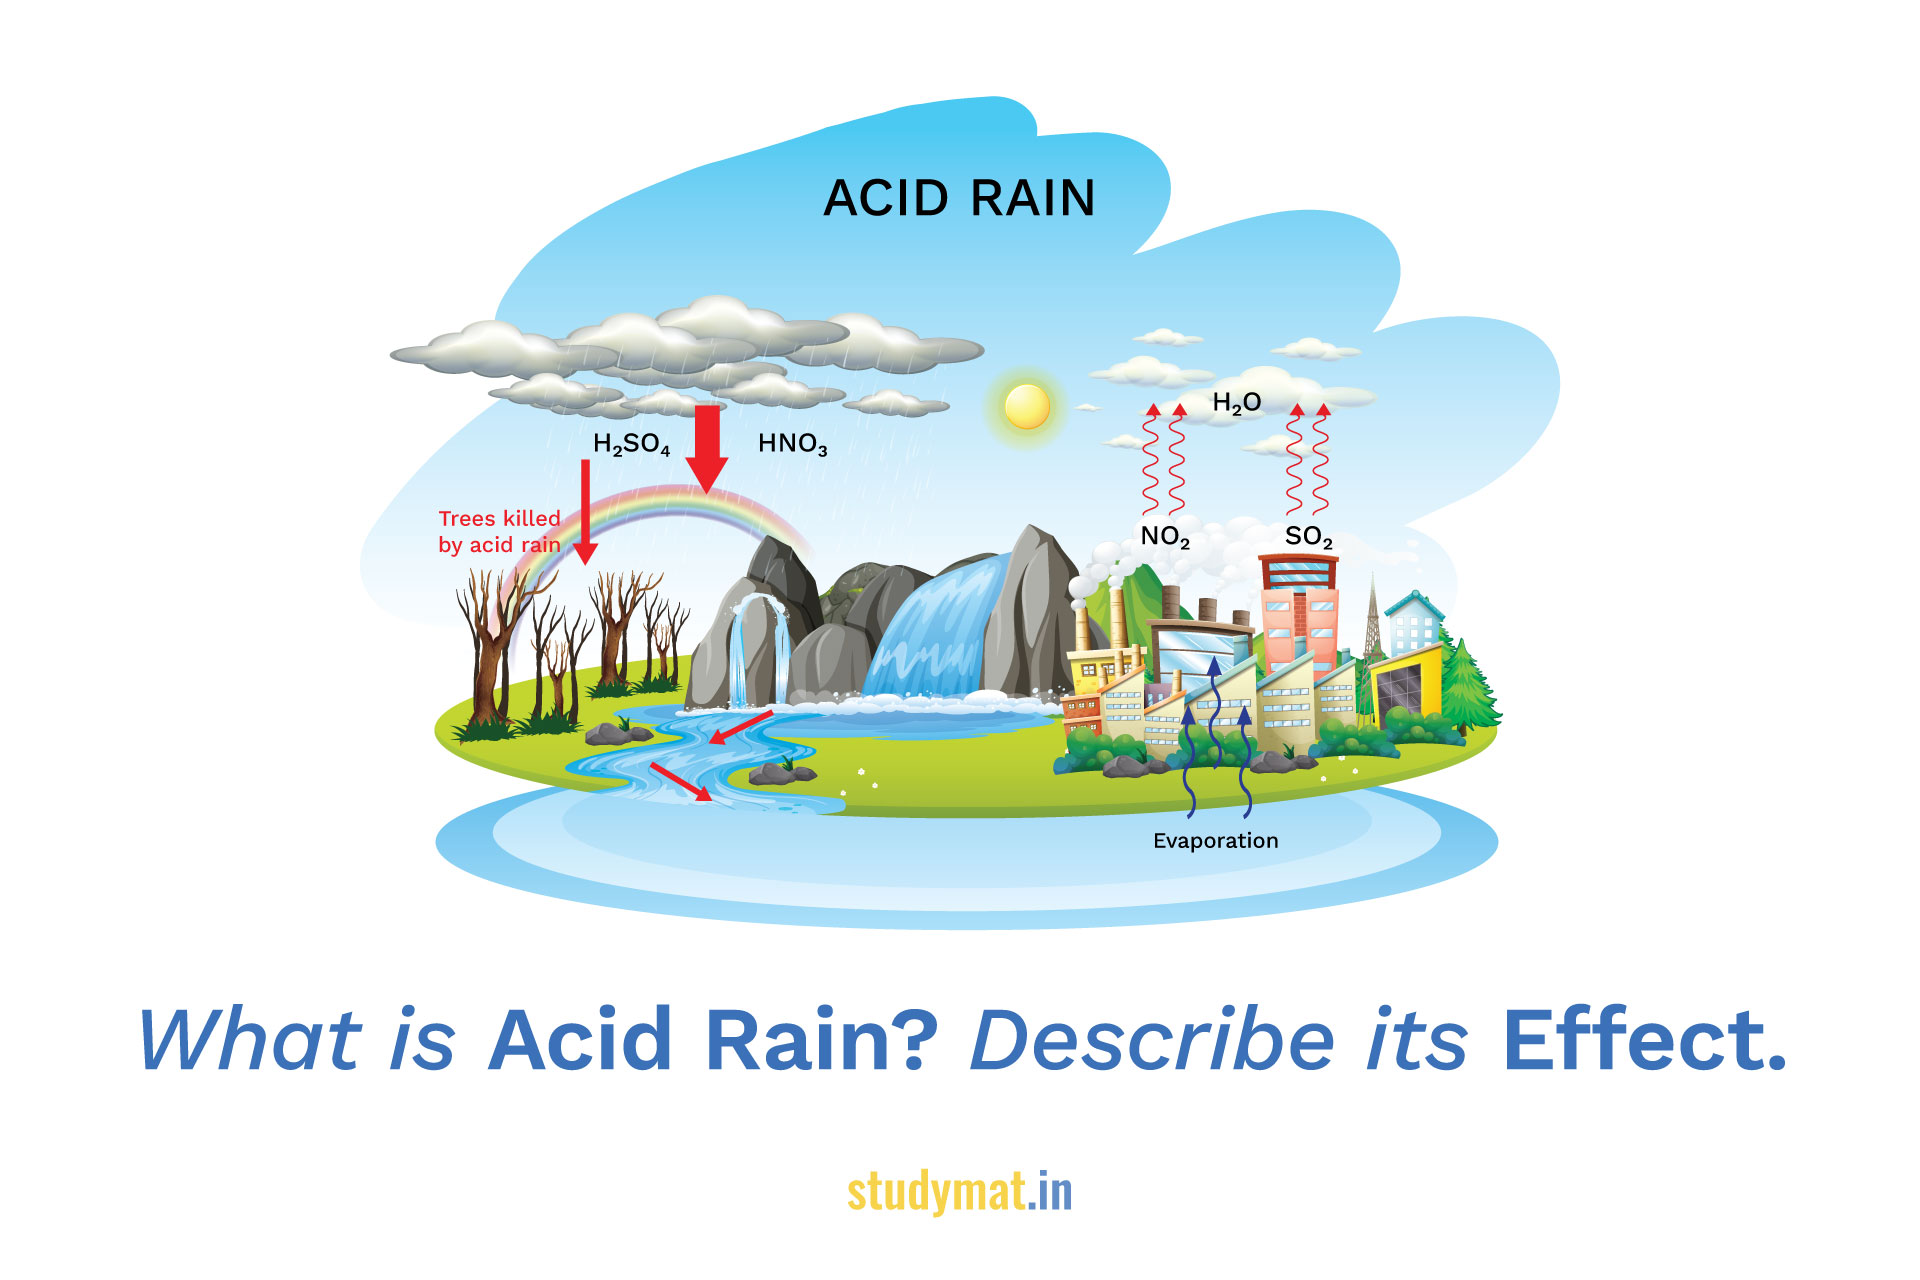 4.04 case study acid rain